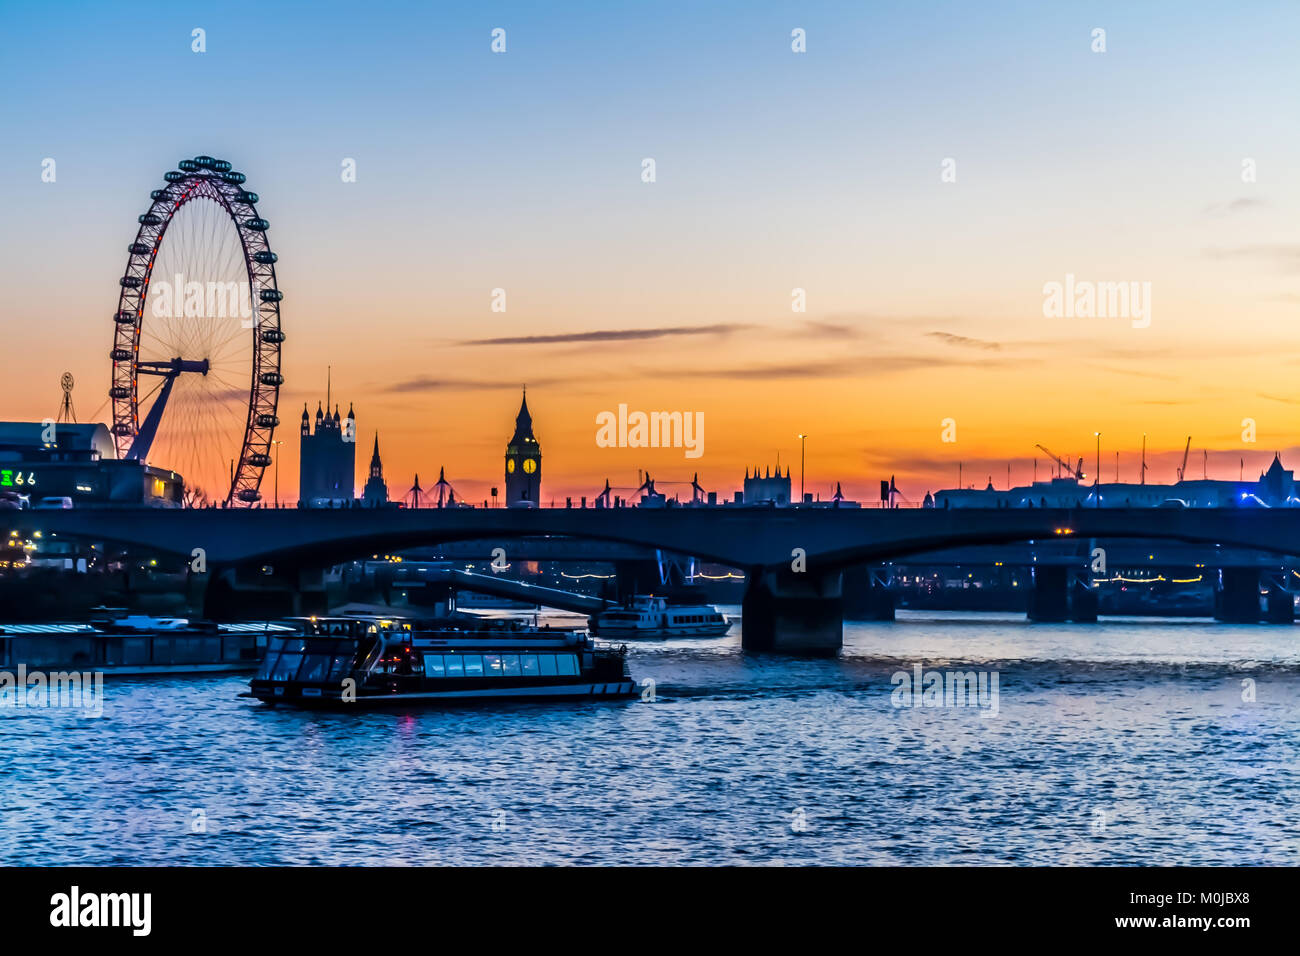 London Eye, Millennium Wheel, Embankment. Stock Photo